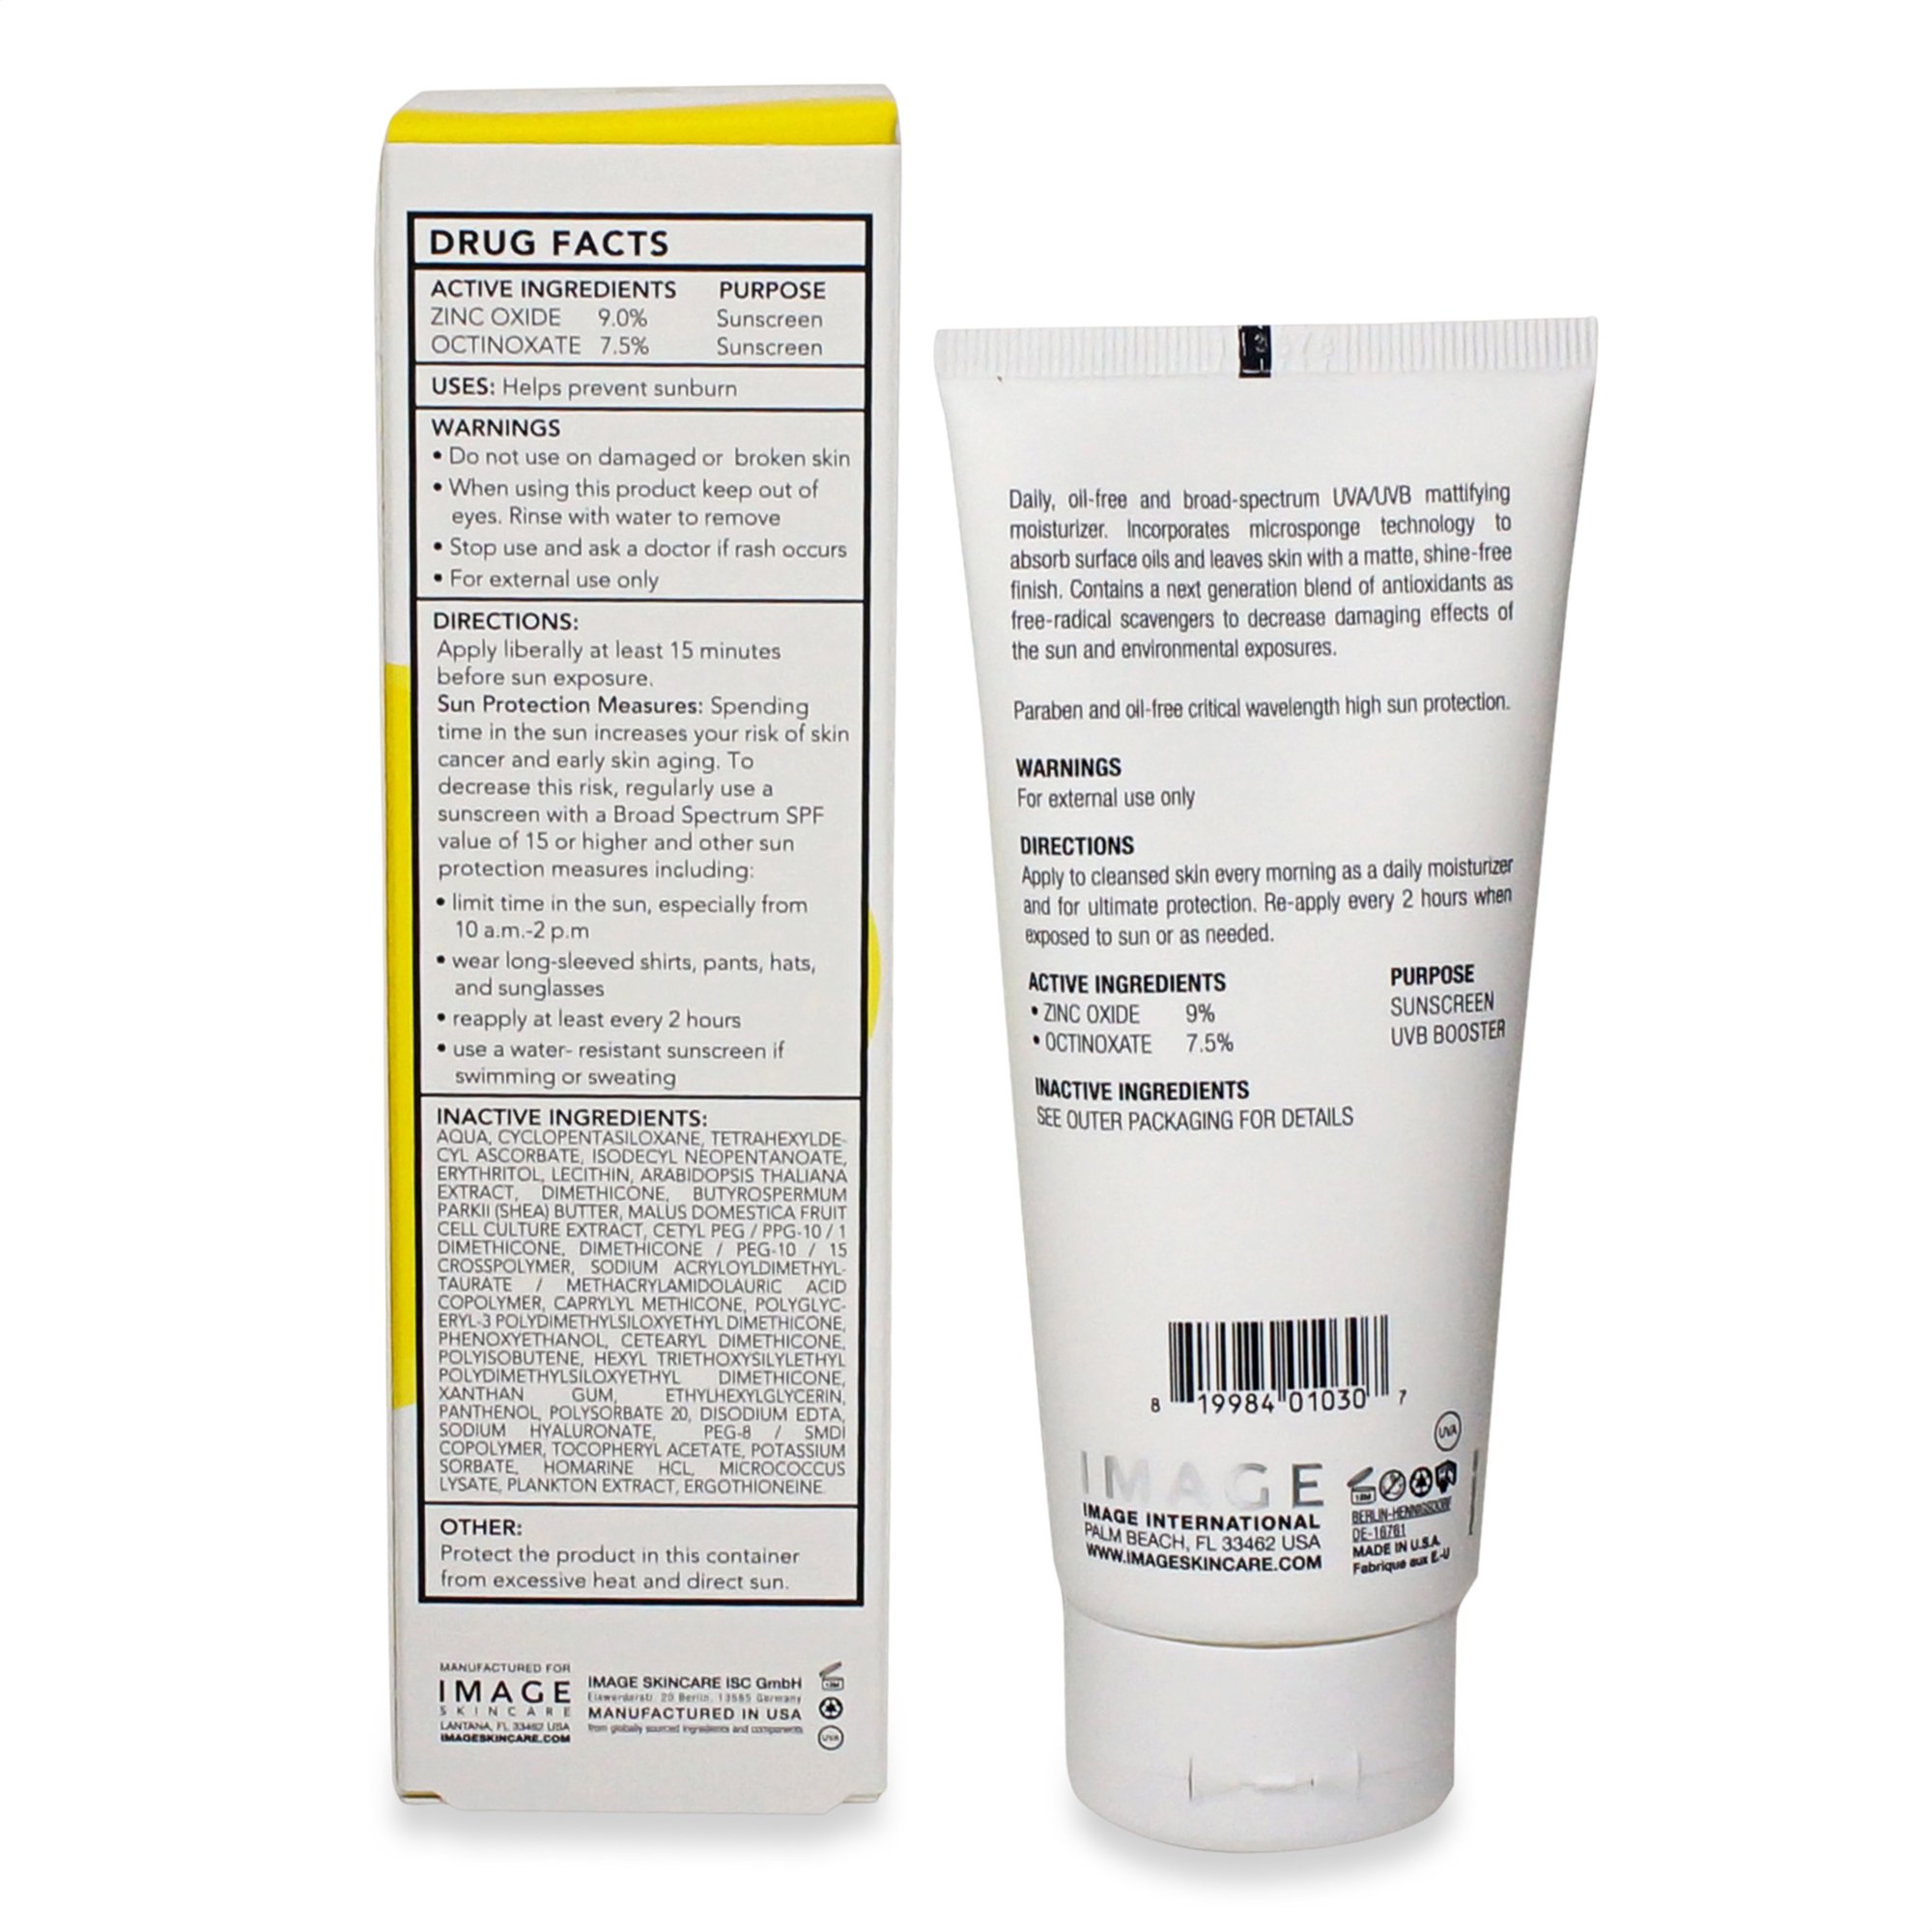 Image Skincare Prevention + Daily Matte Moisturizer 6 oz Oil-Free Professional SPF 32+ Broad Spectrum UVA/UVB Sun Protection - image 3 of 3